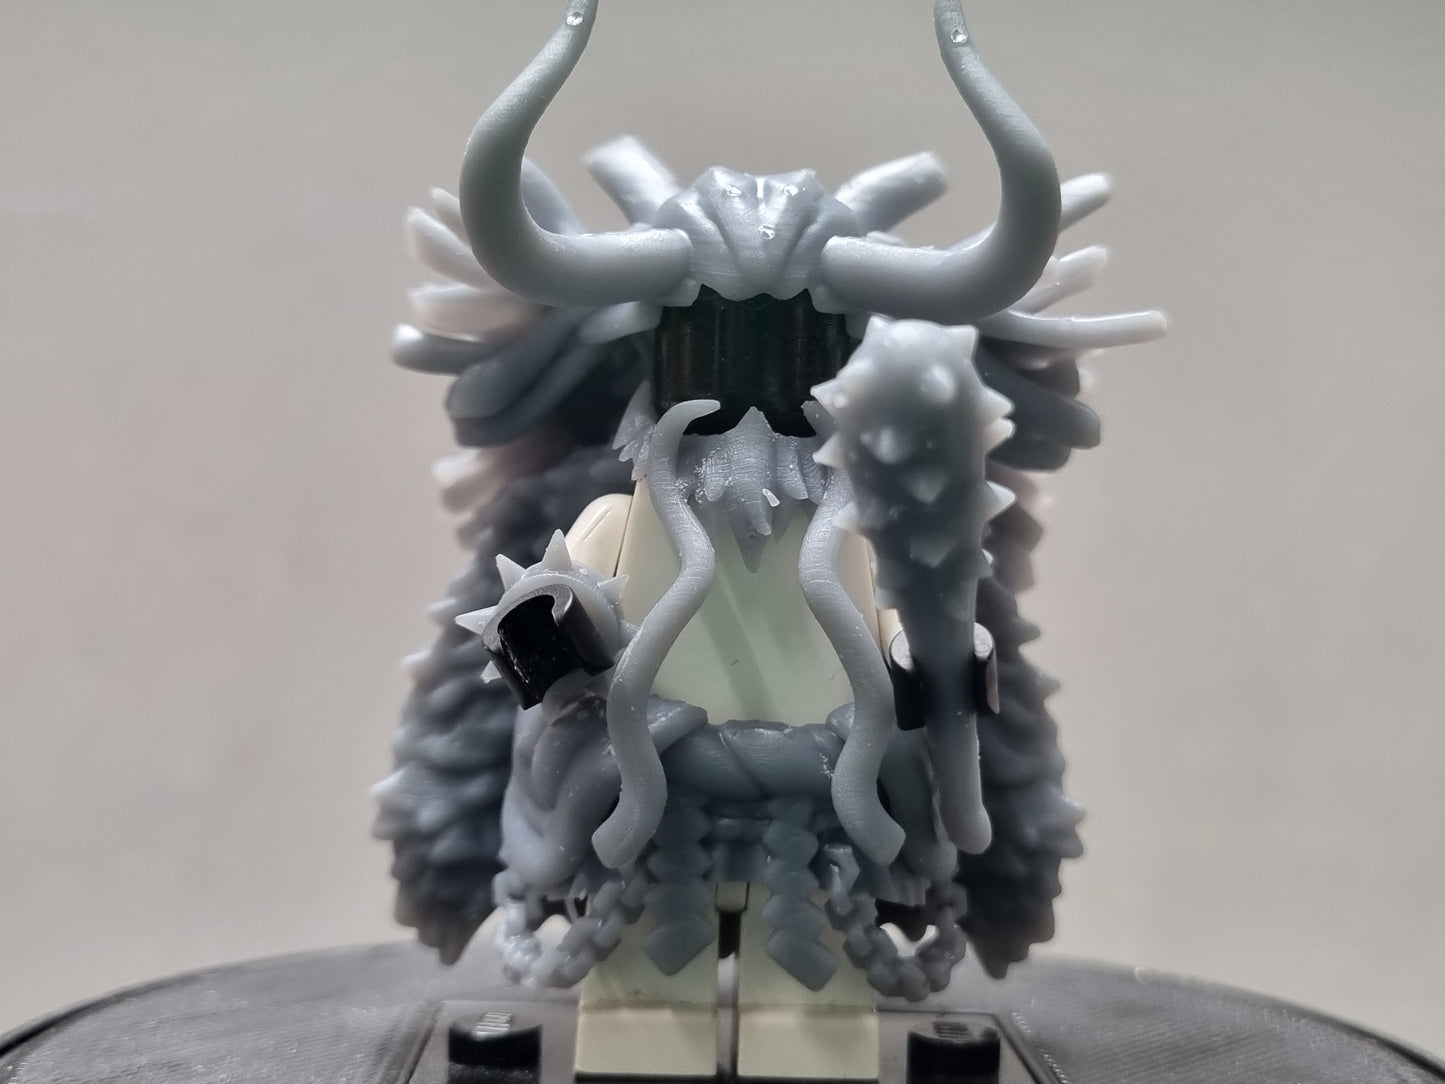 Lego compatible bull dragon custom 3D printed armor set!